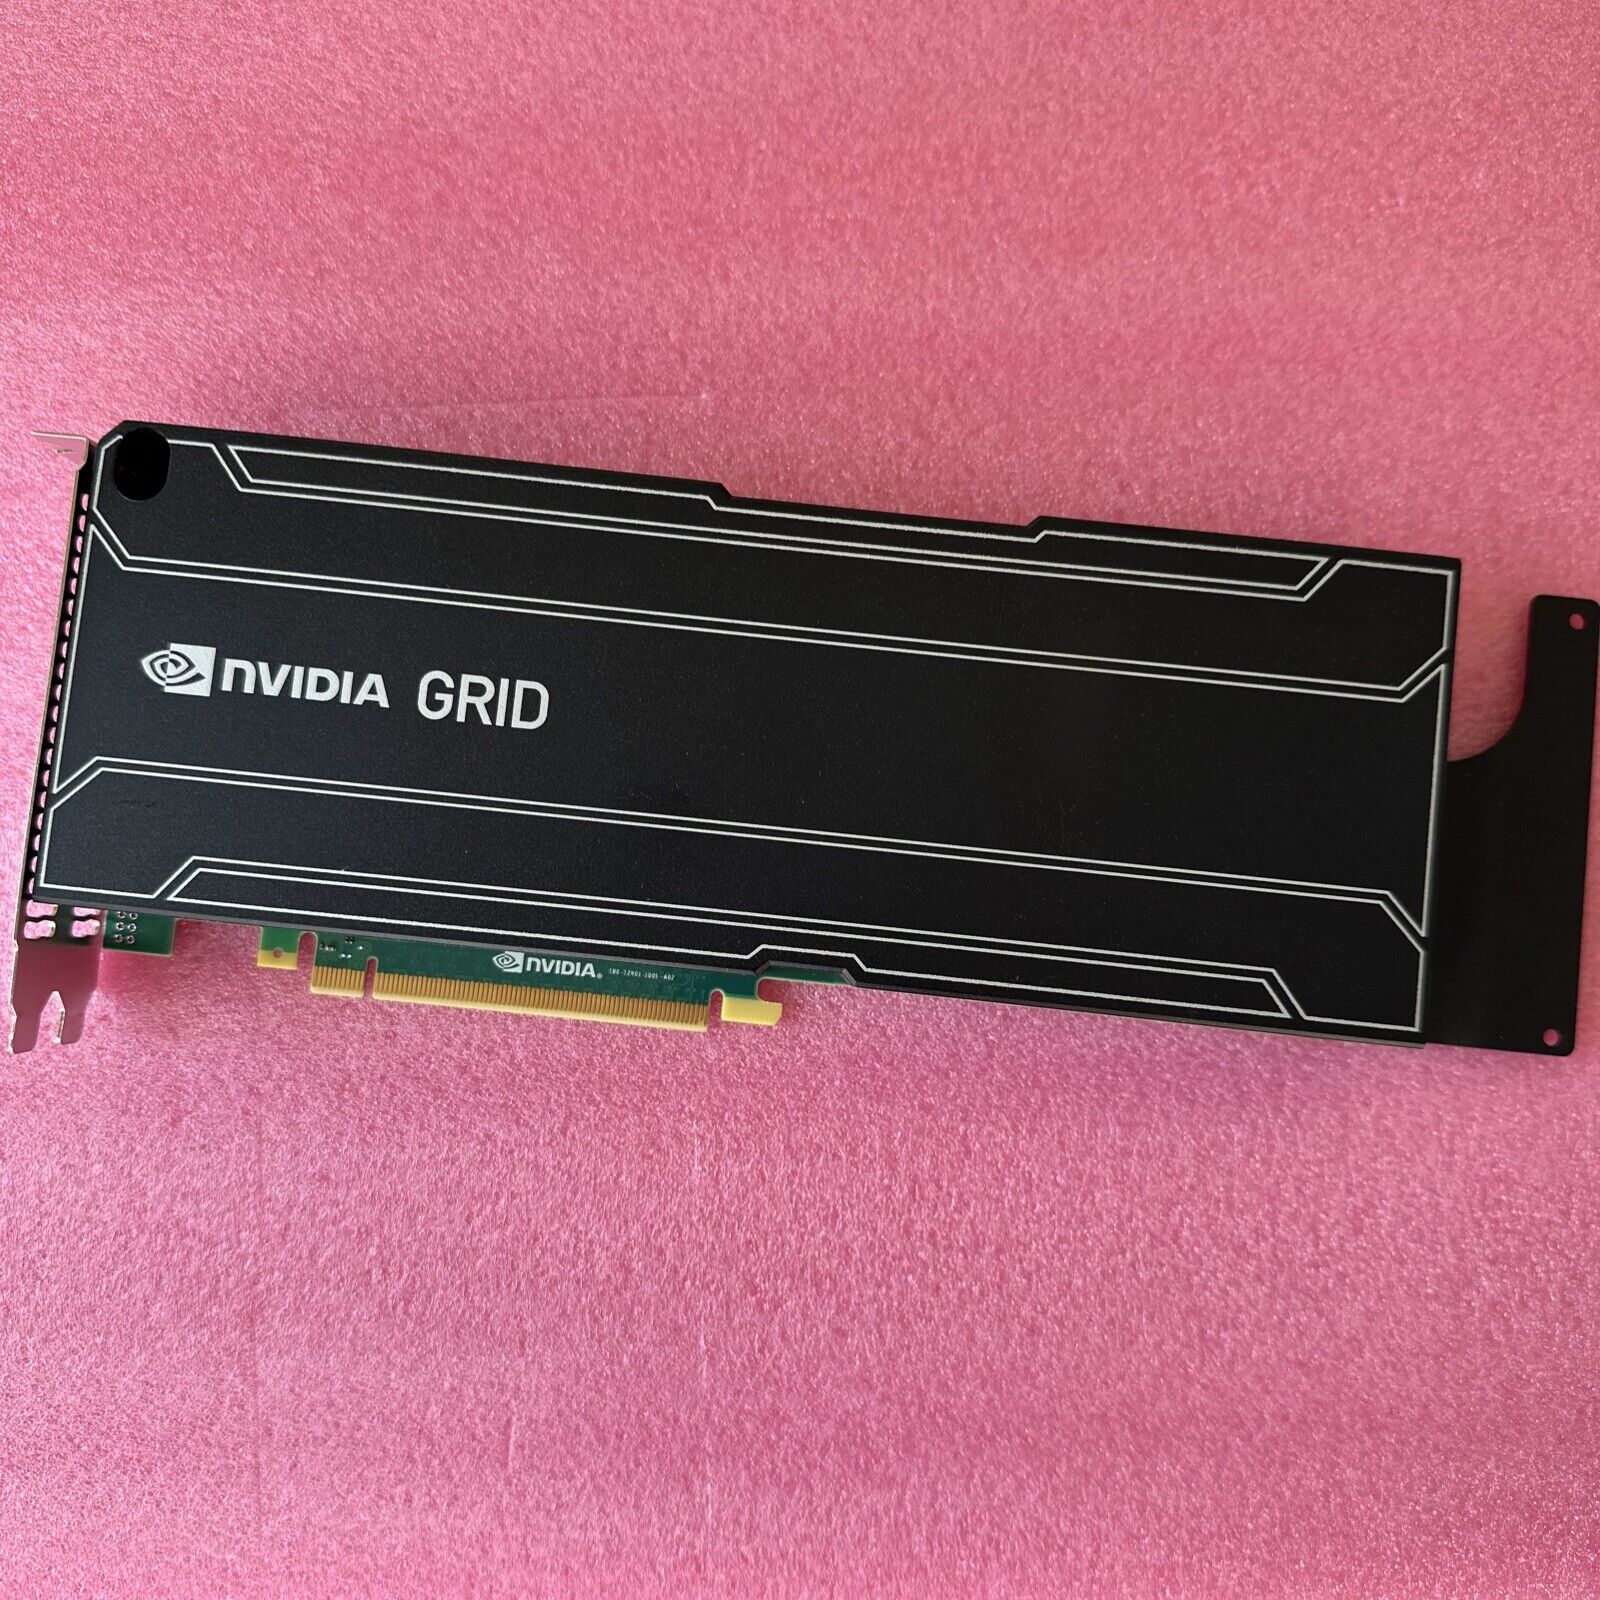 Cisco NVIDIA GRID K1 Quad GPU 16GB DDR3 PCI-e x16 Graphics Accelerator